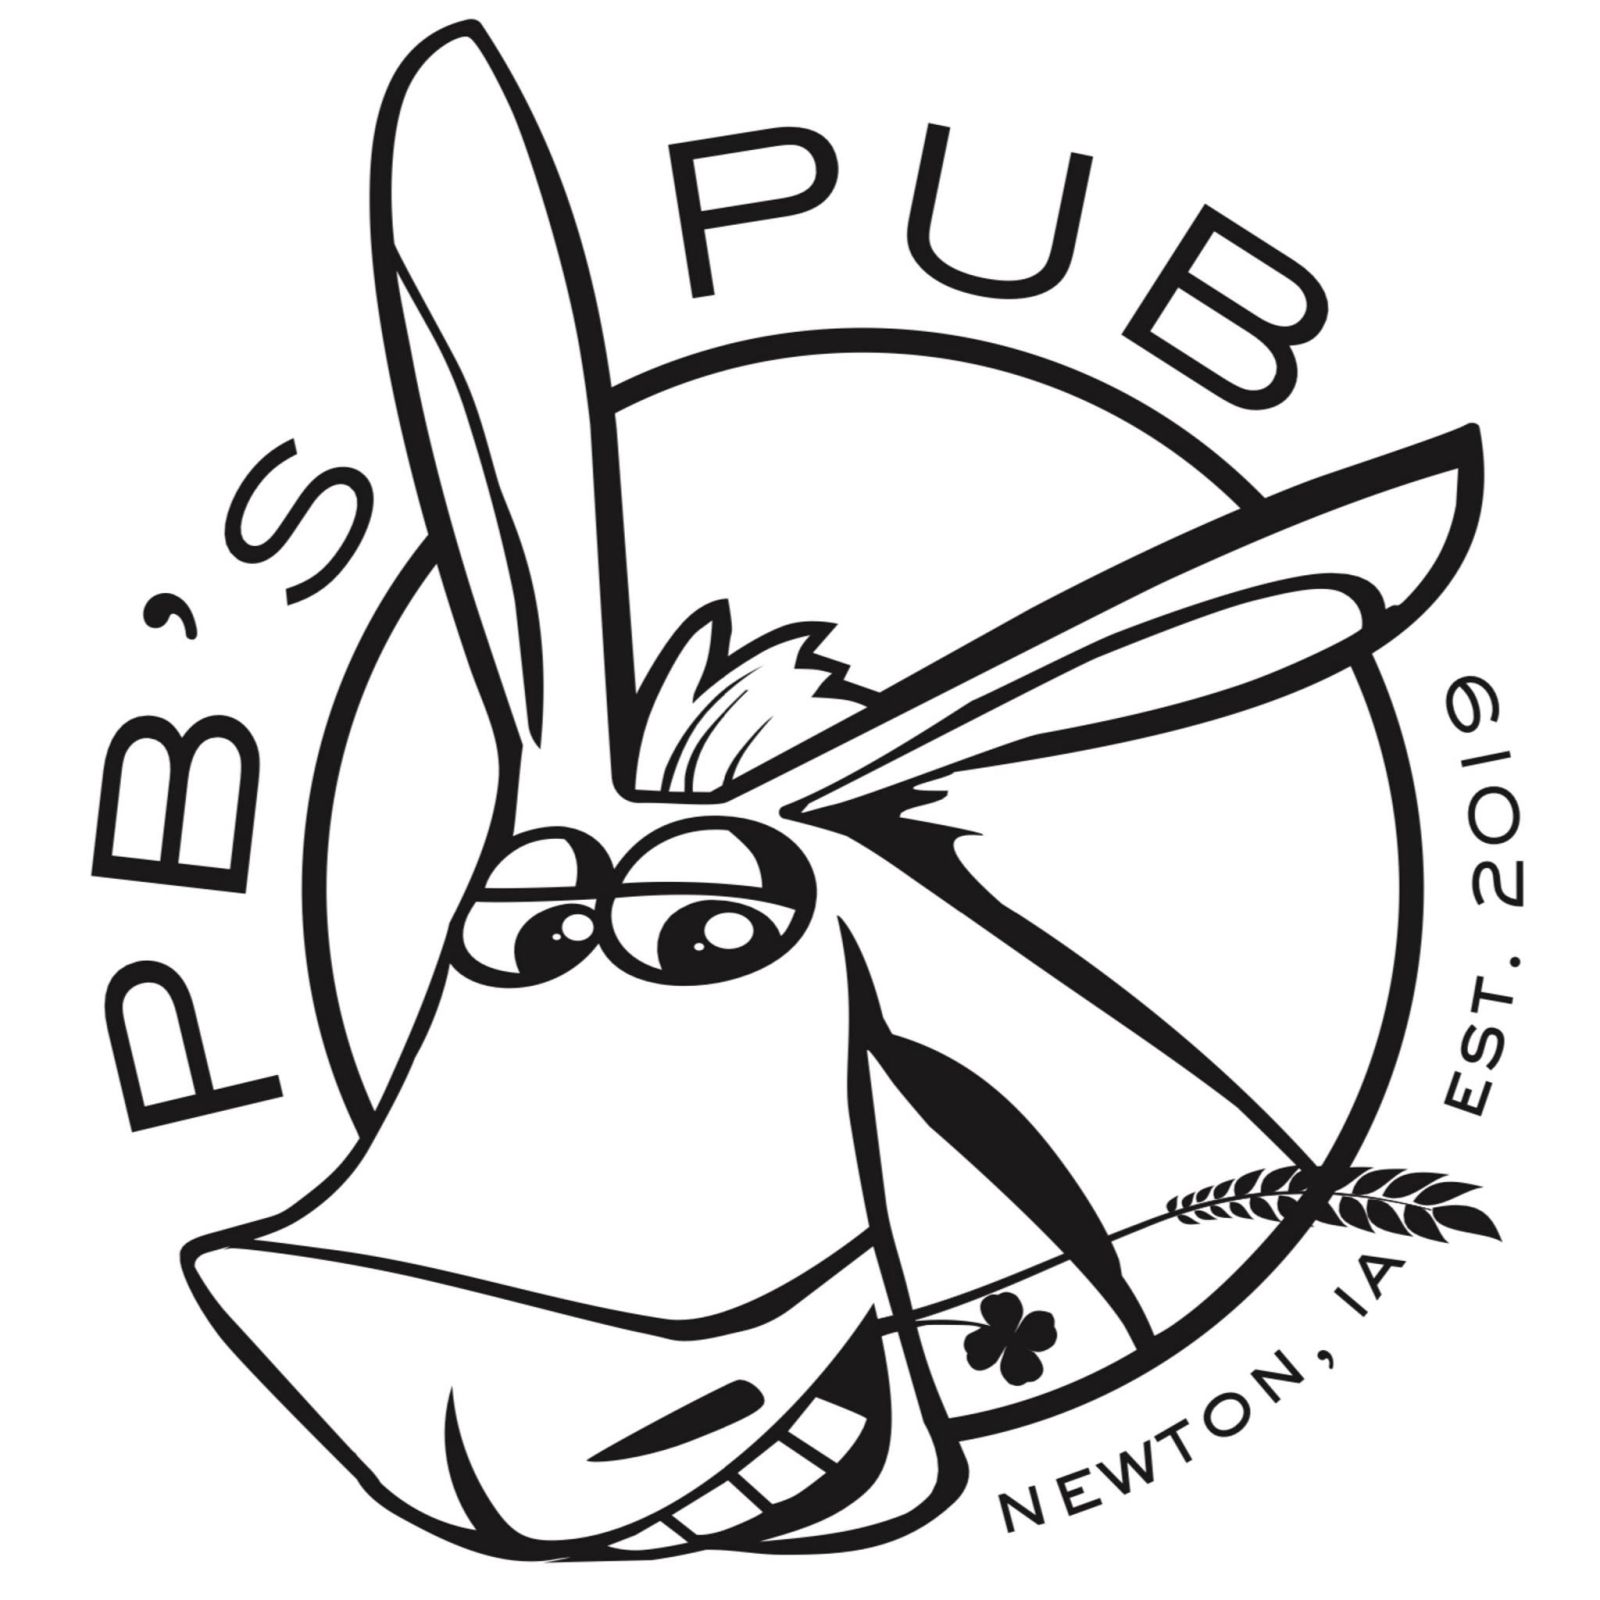 PB's Pub's Image